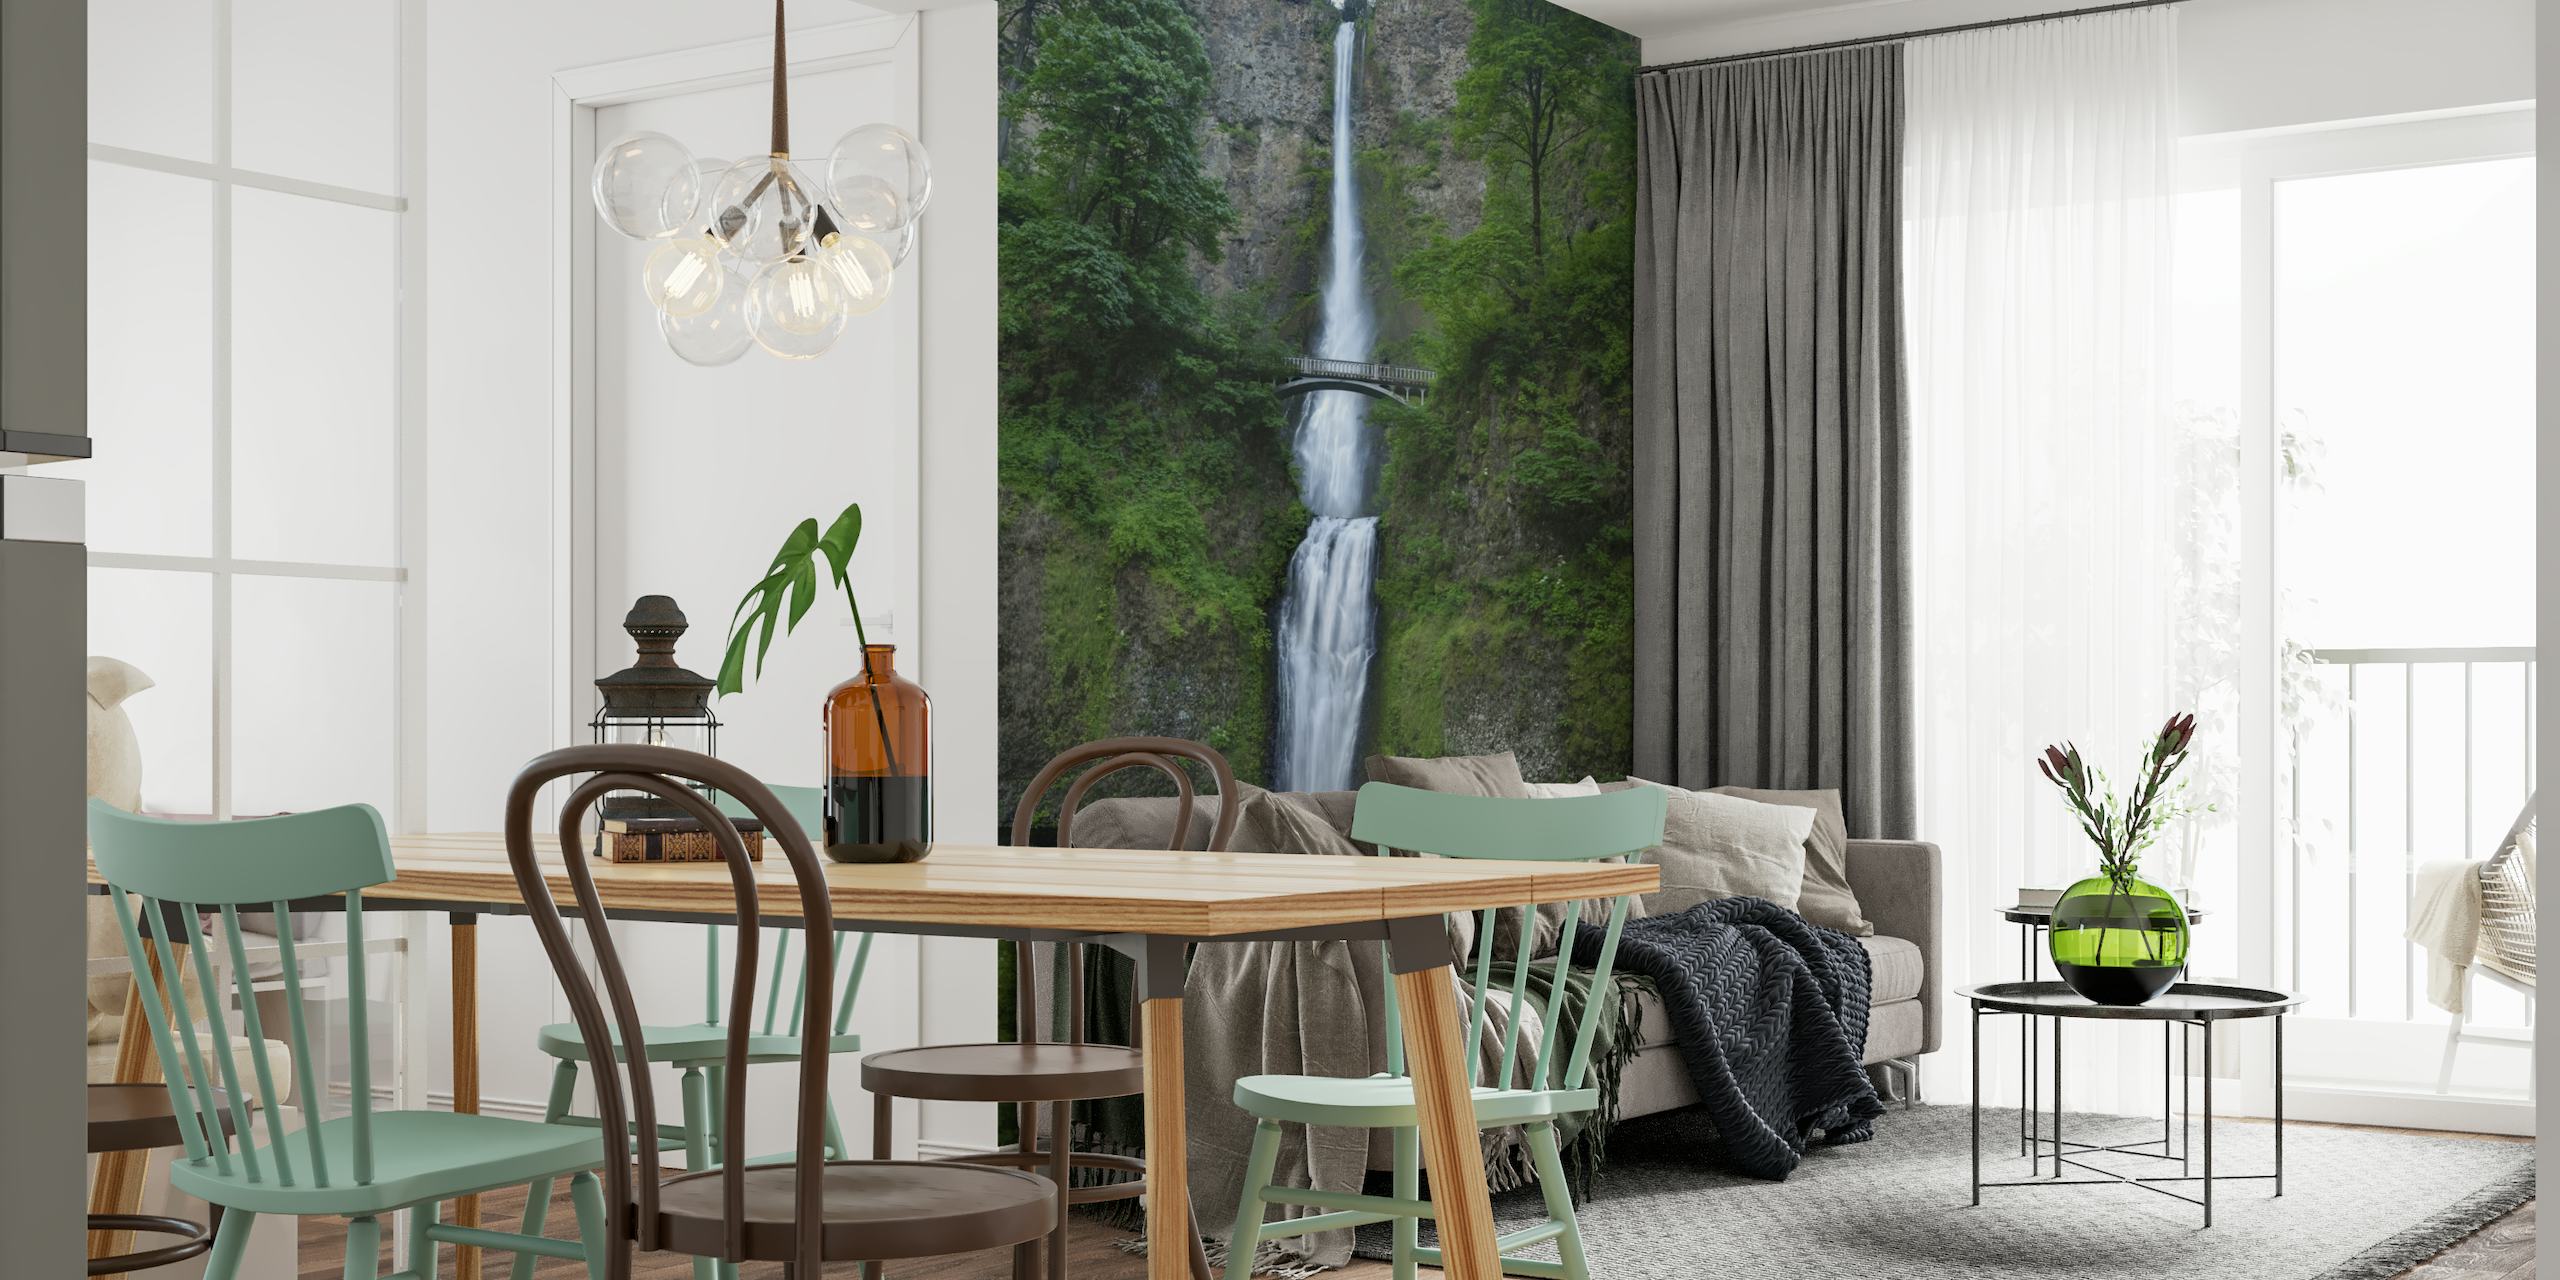 Zidna slika s slapovima Multnomah s bujnim zelenilom i kaskadnim vodama.